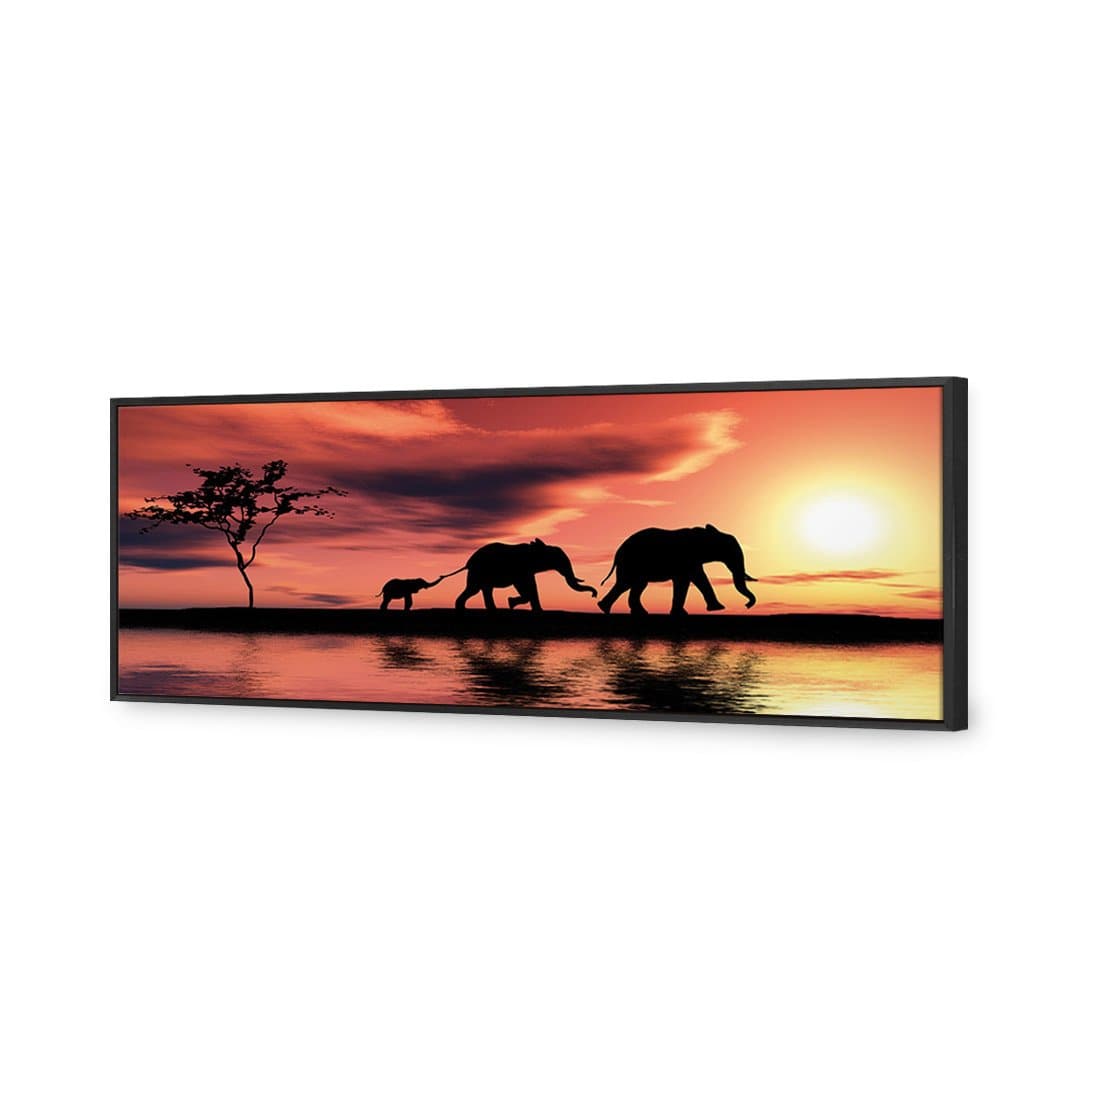 Family of Elephants at Sunset Canvas Art-Canvas-Wall Art Designs-60x20cm-Canvas - Black Frame-Wall Art Designs